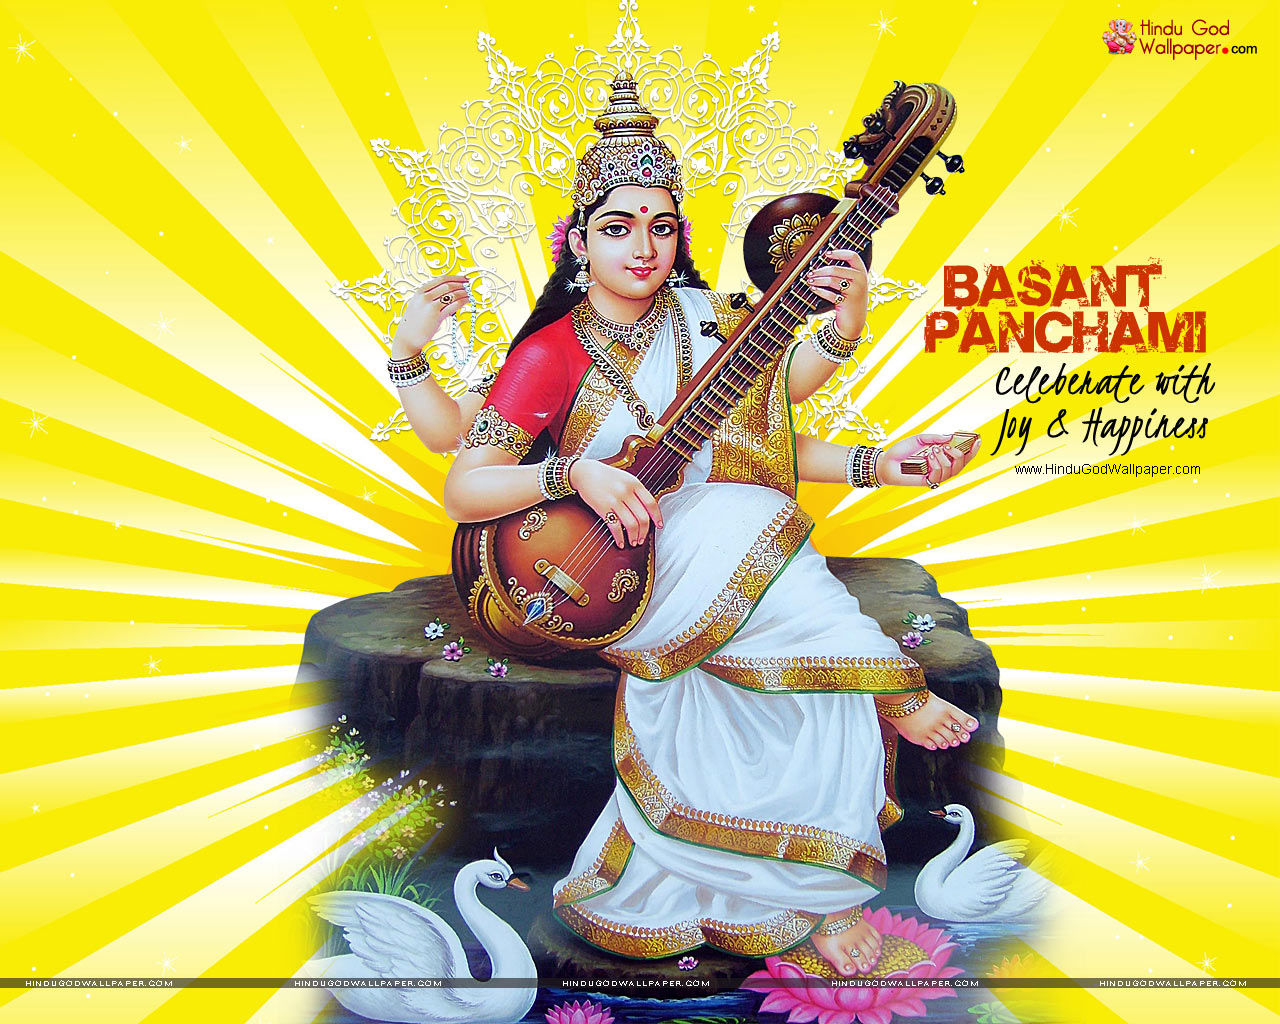 Basant Panchami Hd Wallpapers Images Free Download